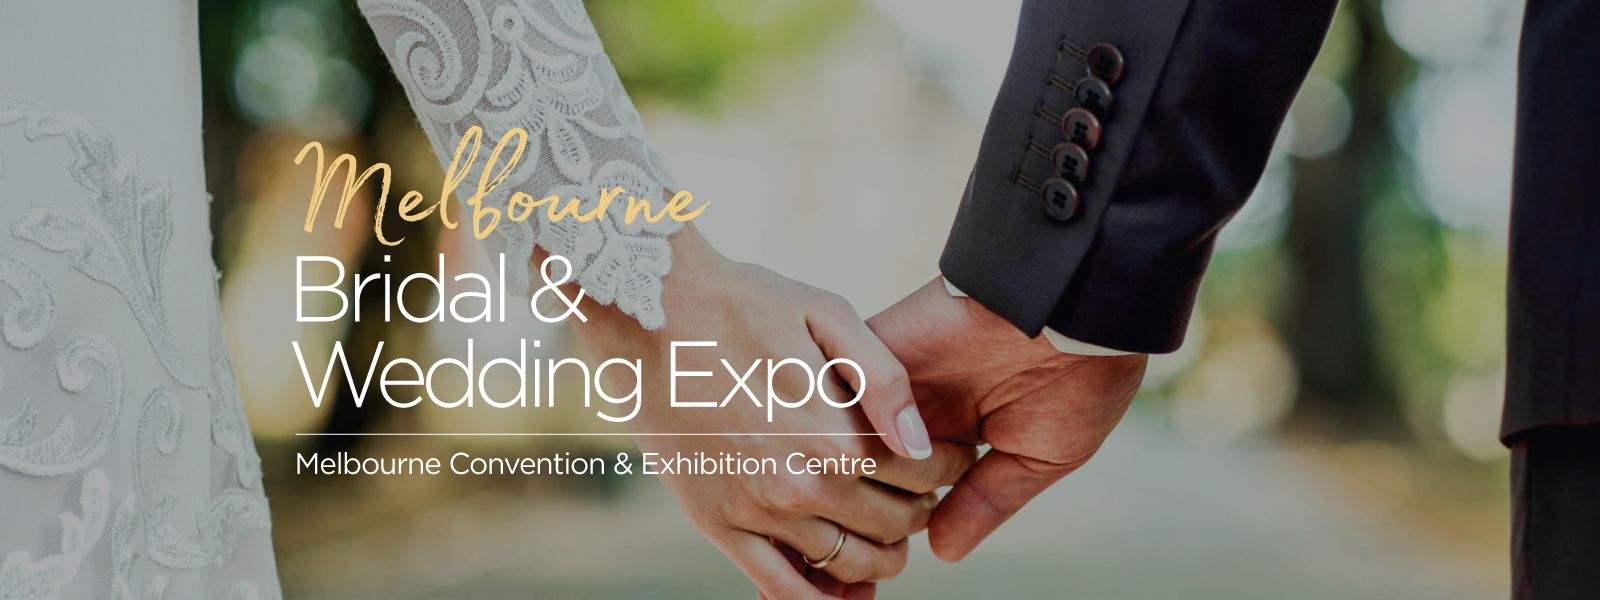 The Melbourne Bridal & Wedding Expo